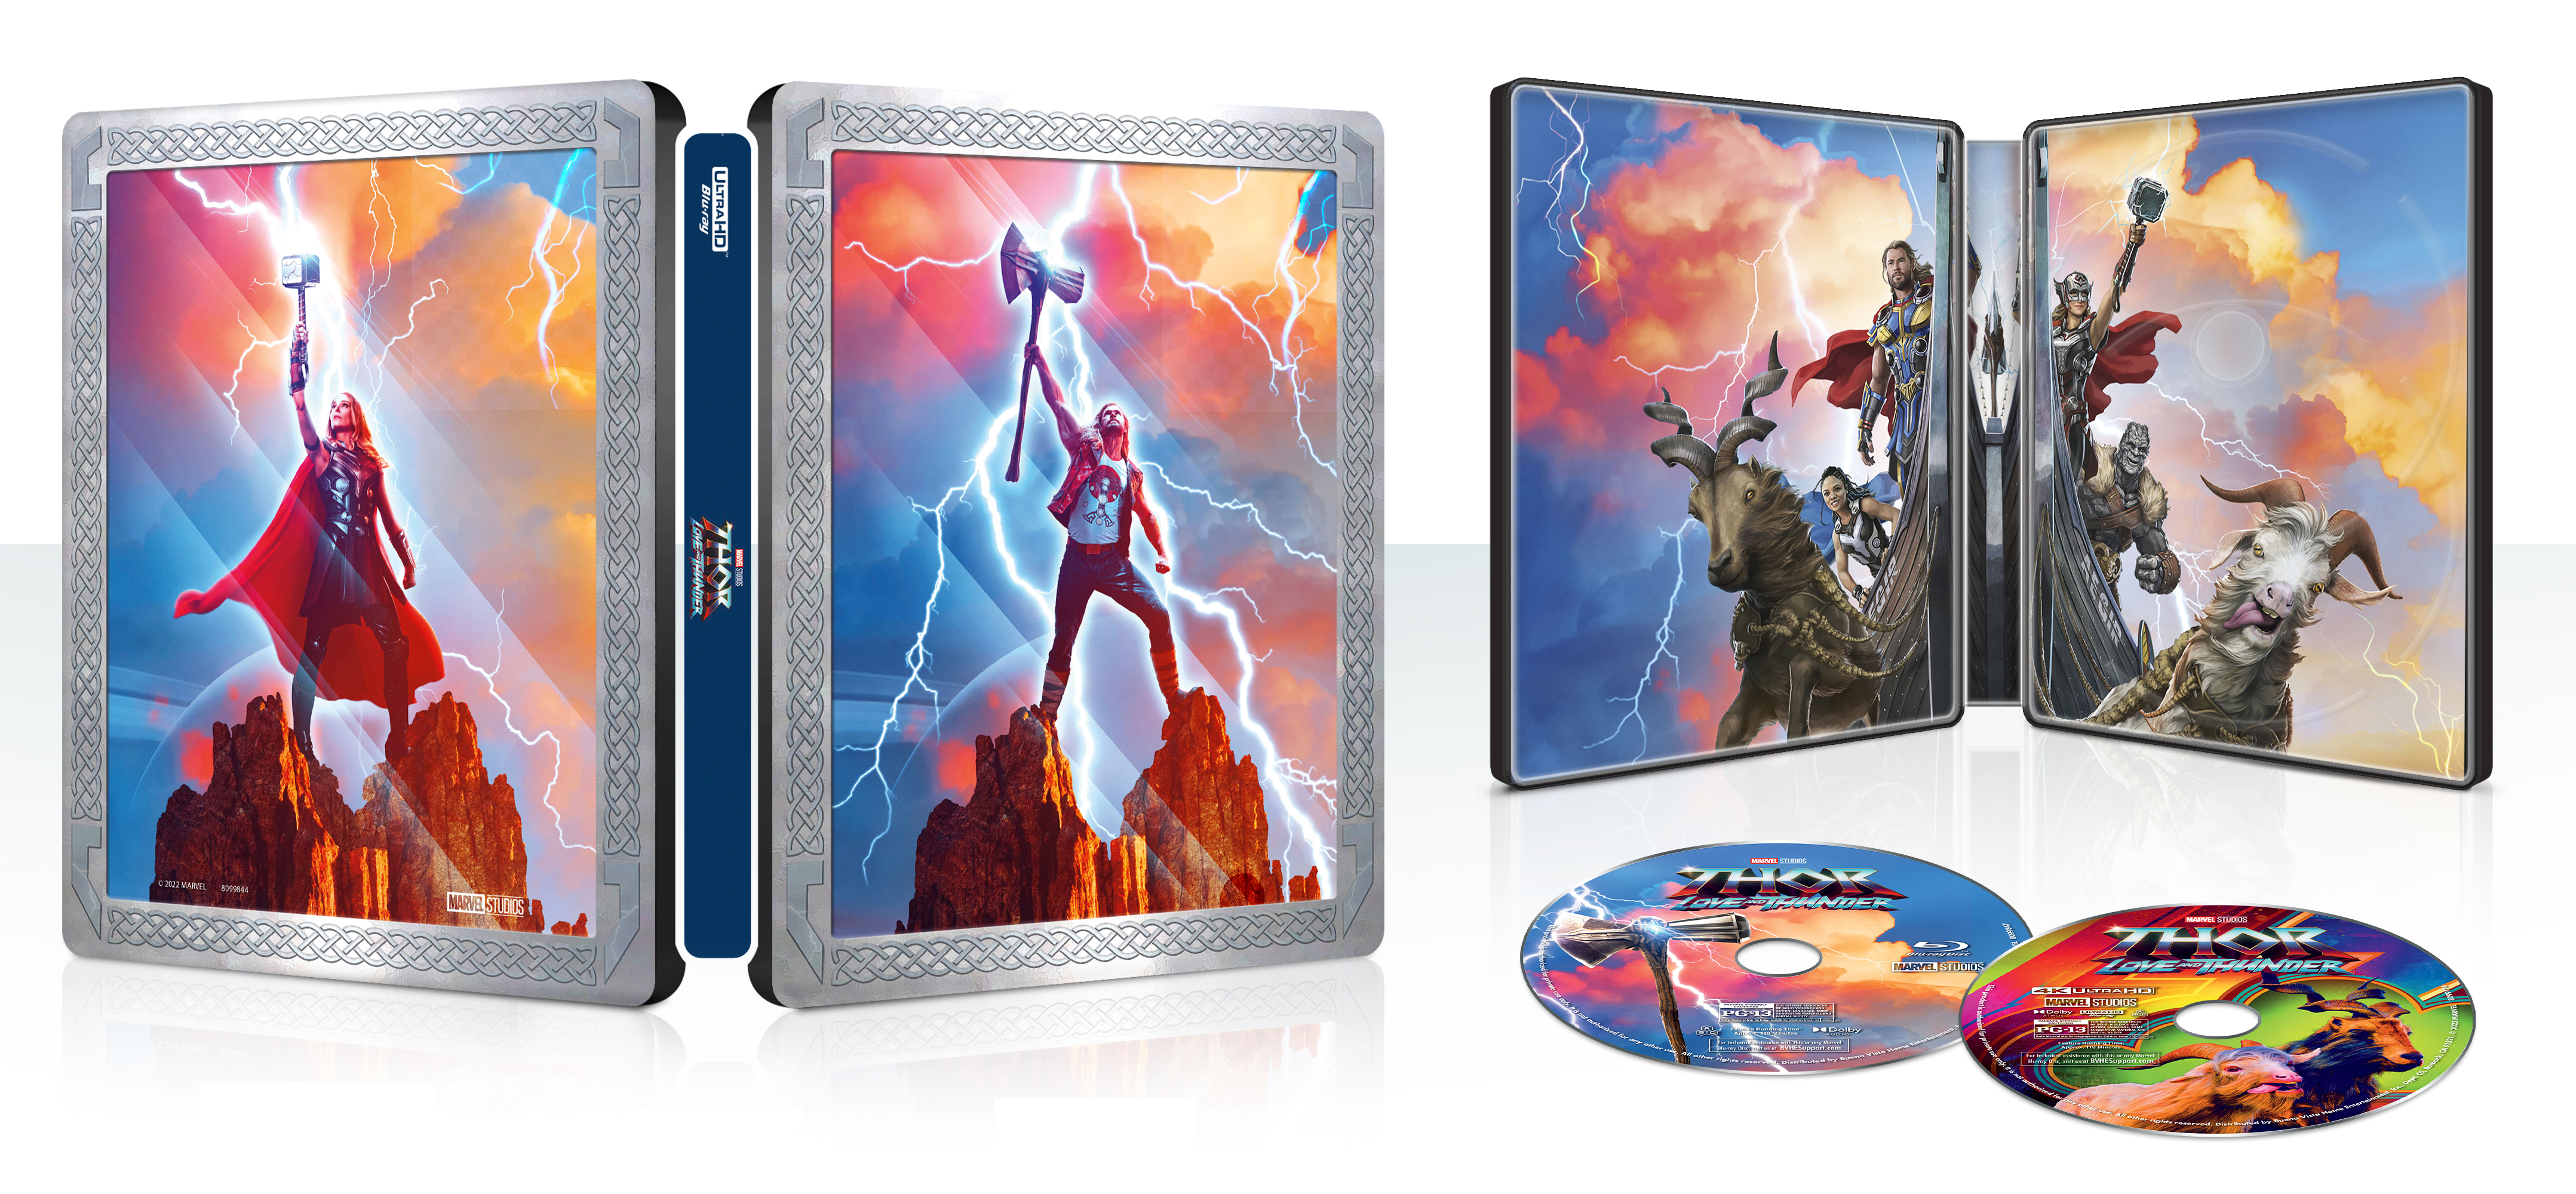 Heat 4K Blu-ray (Best Buy Exclusive SteelBook)